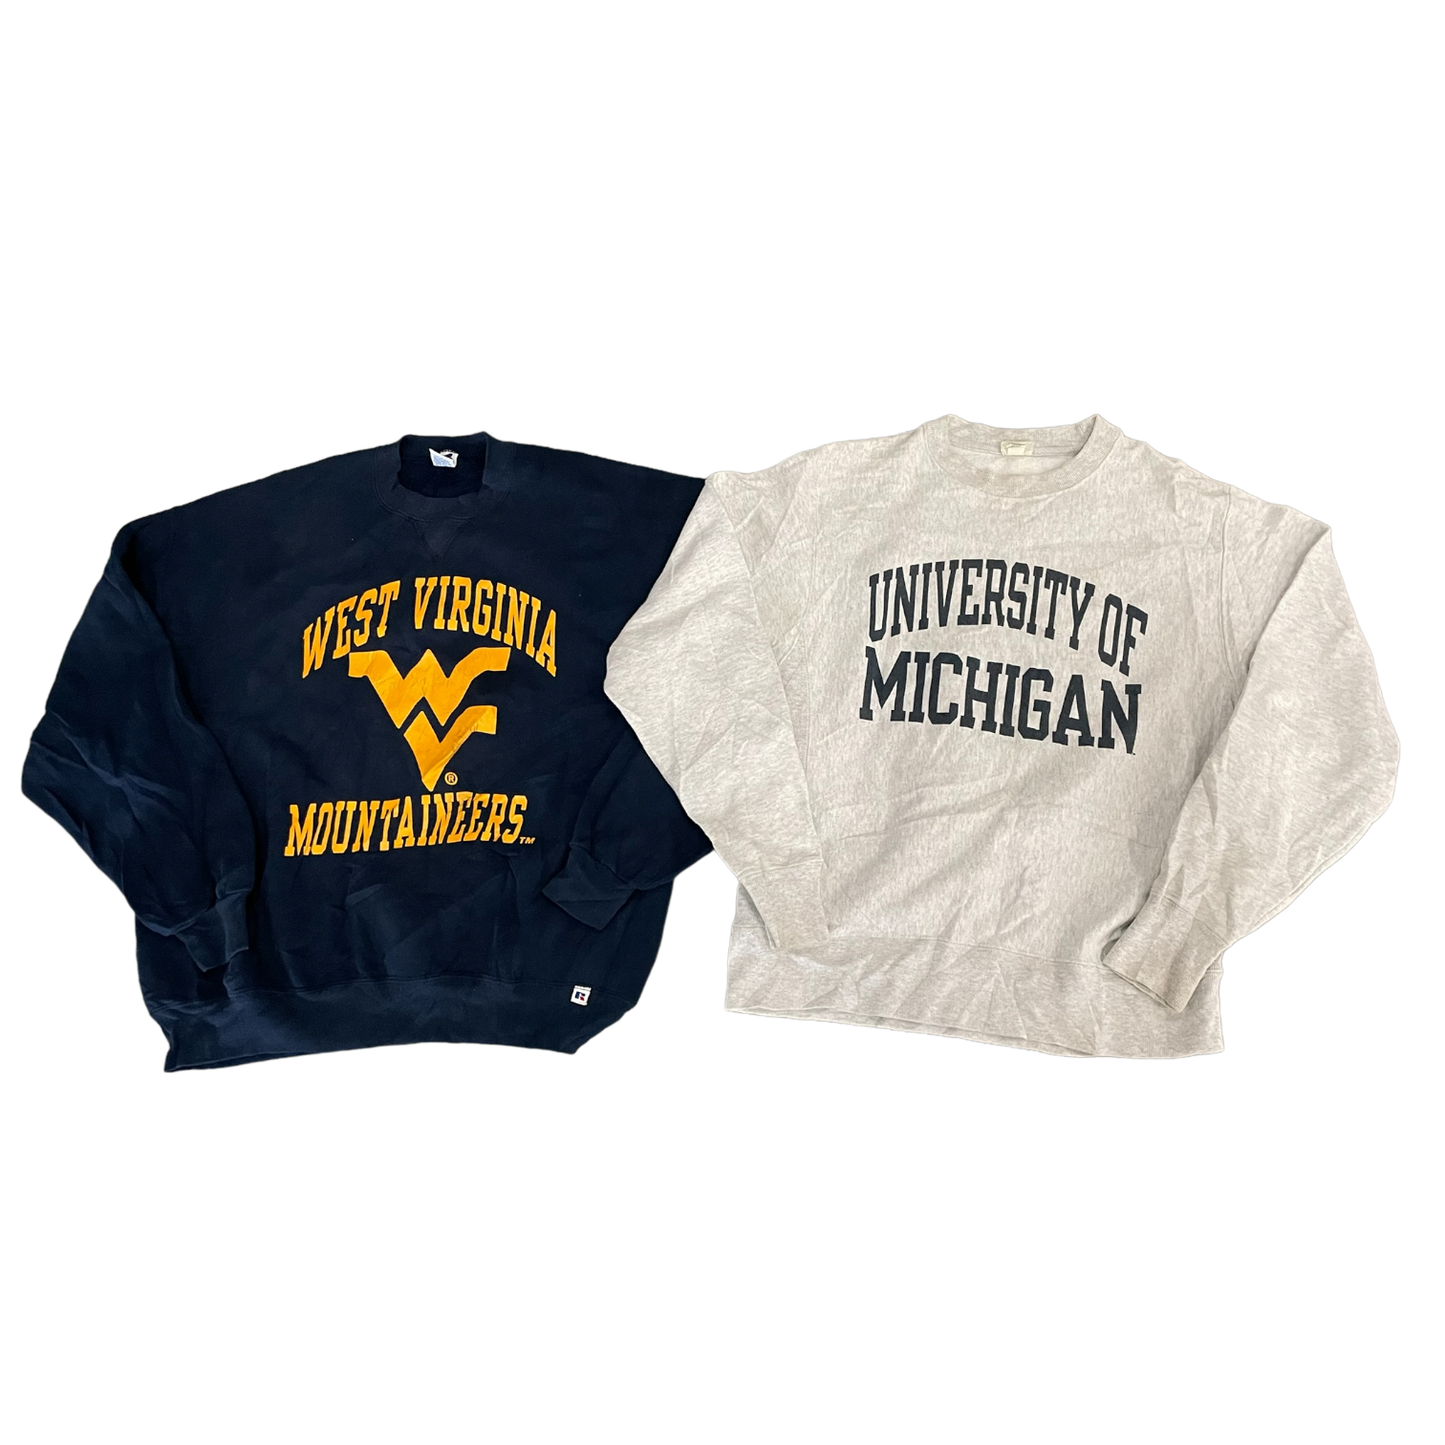 College & University Sweatshirts & Hoodies Intro Pack